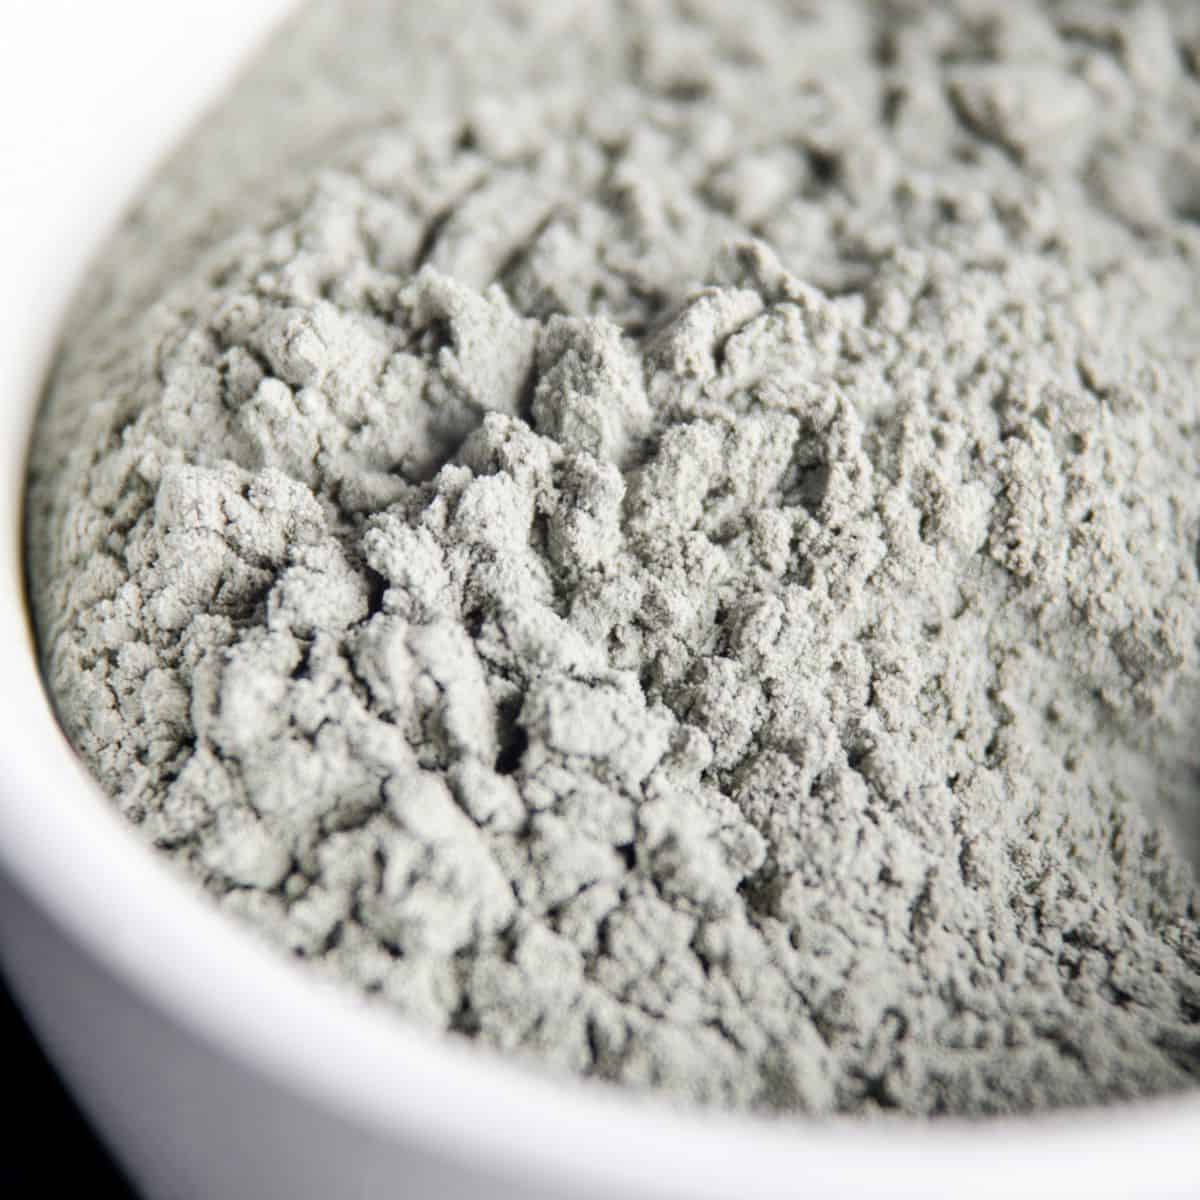 A white bowl of grey-powdered bentonite clay